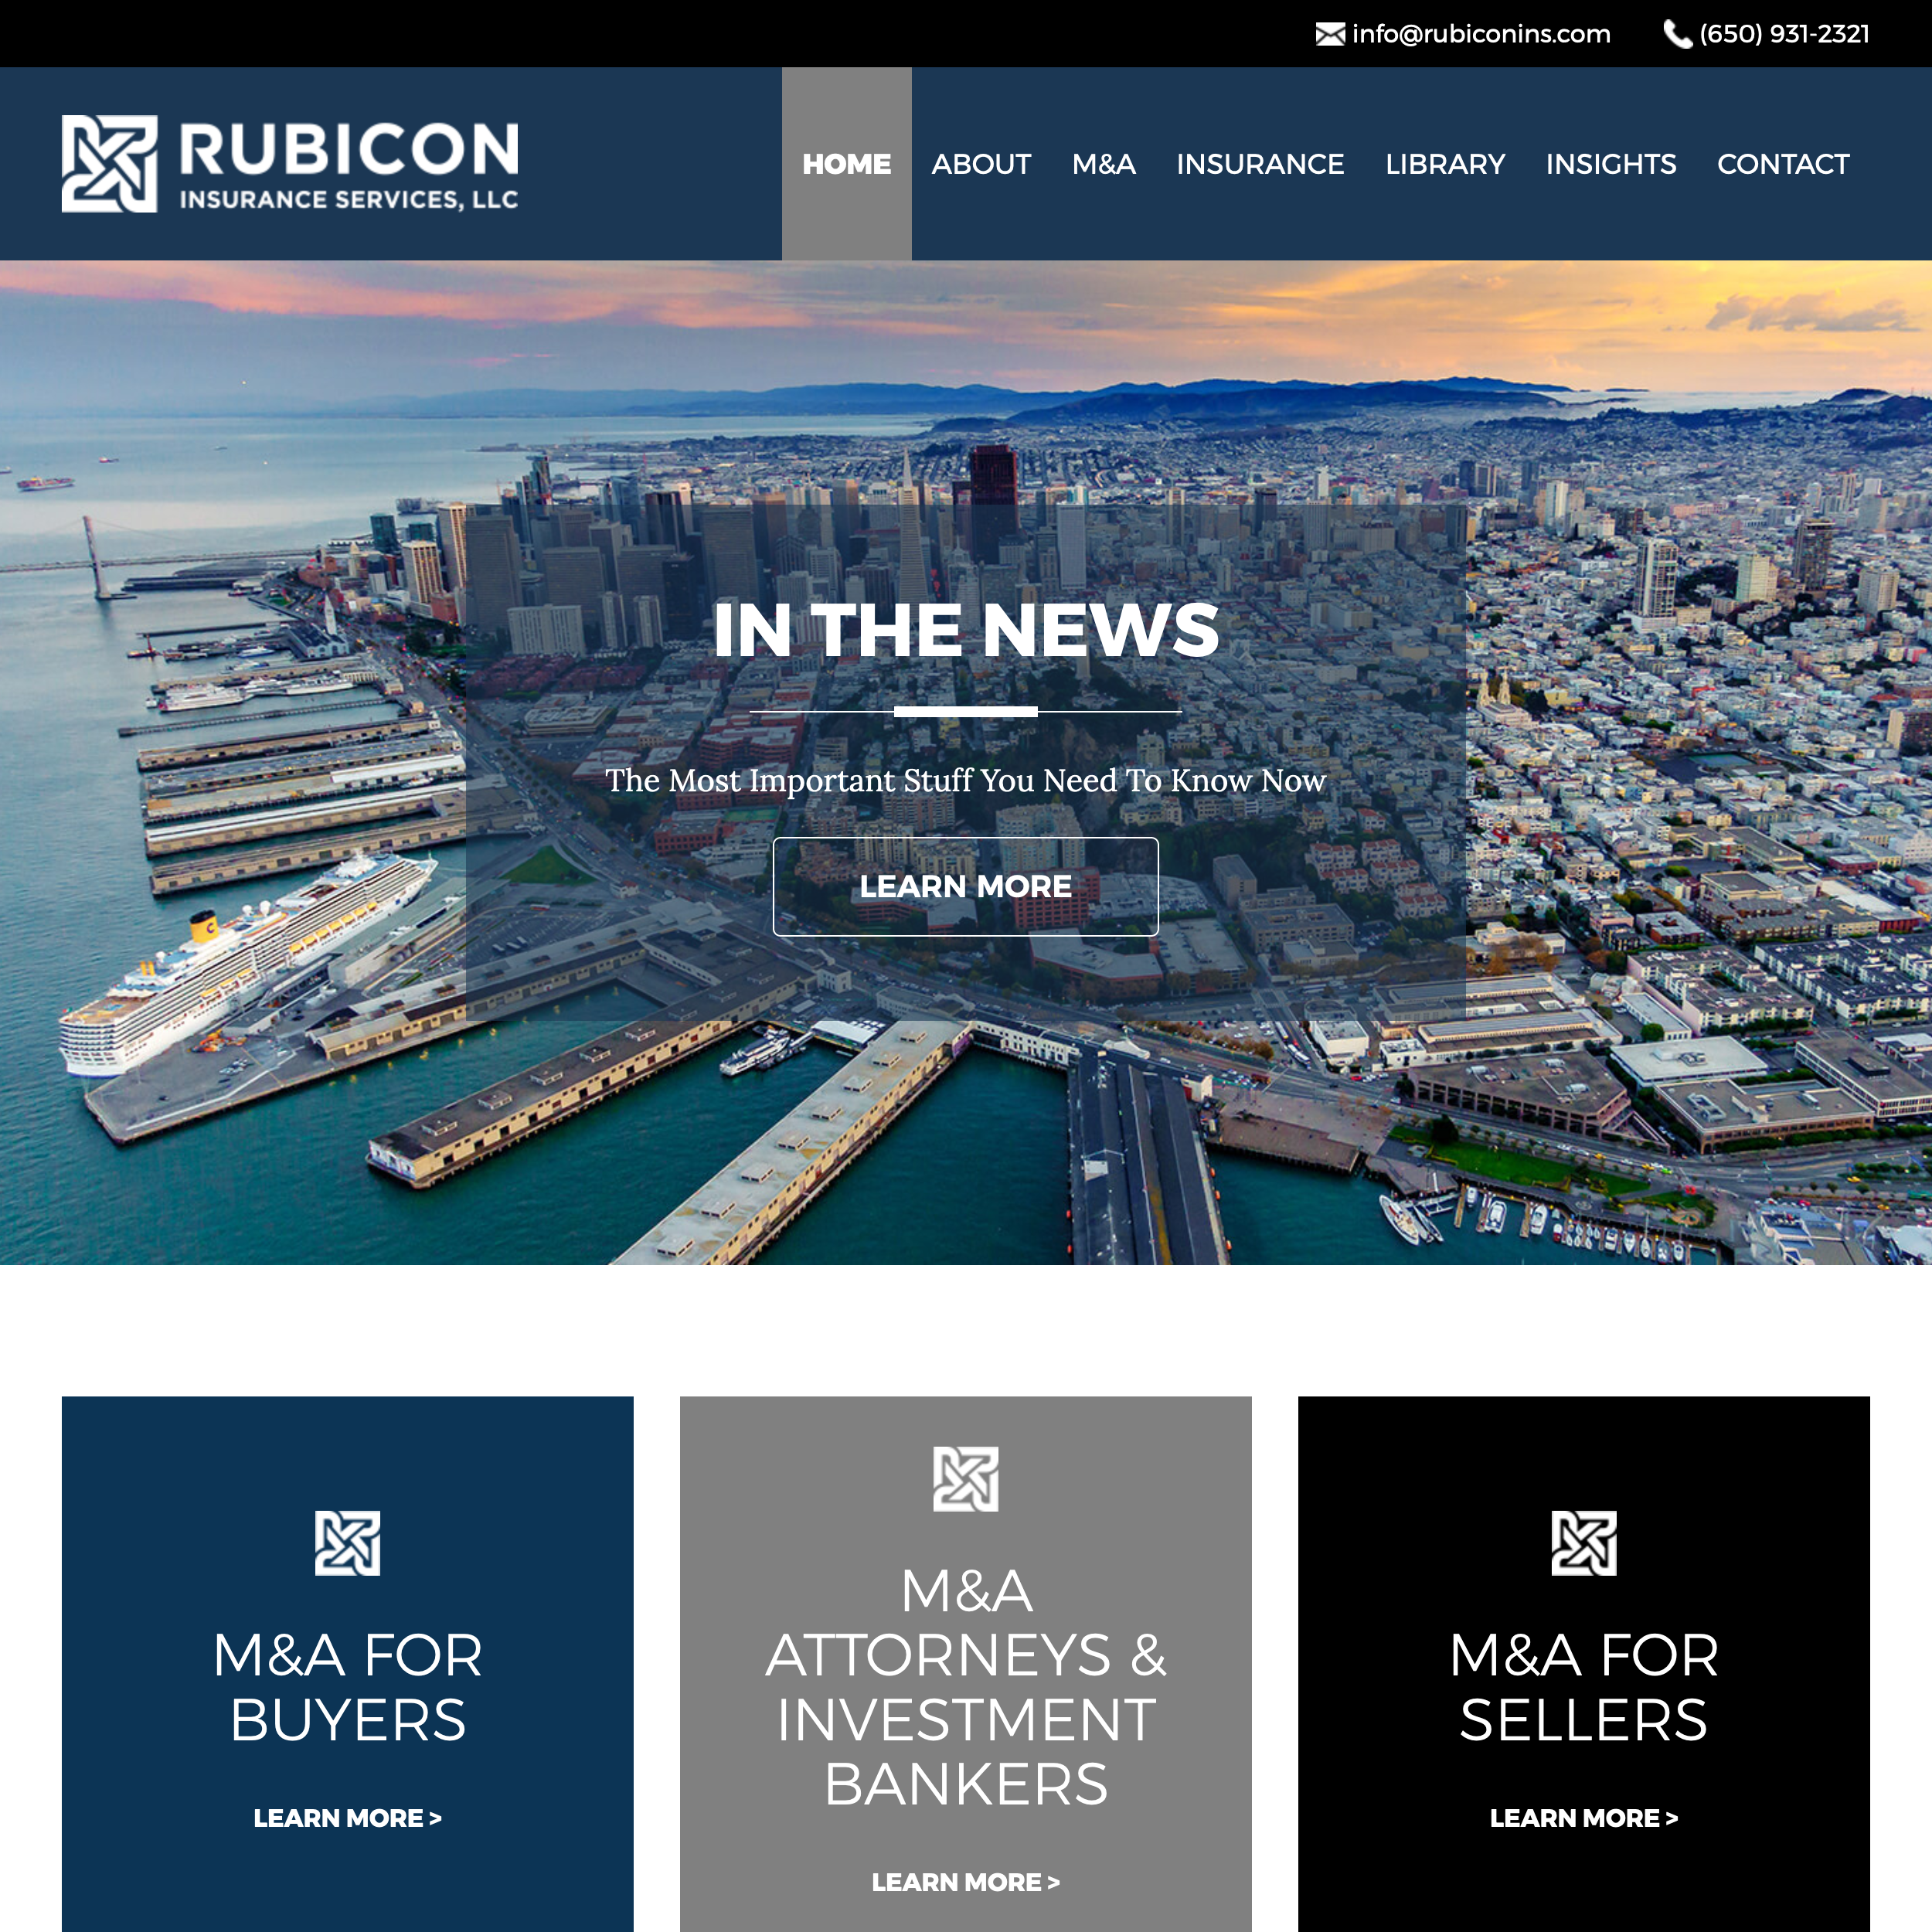 Rubicon Insurance Services, LLC